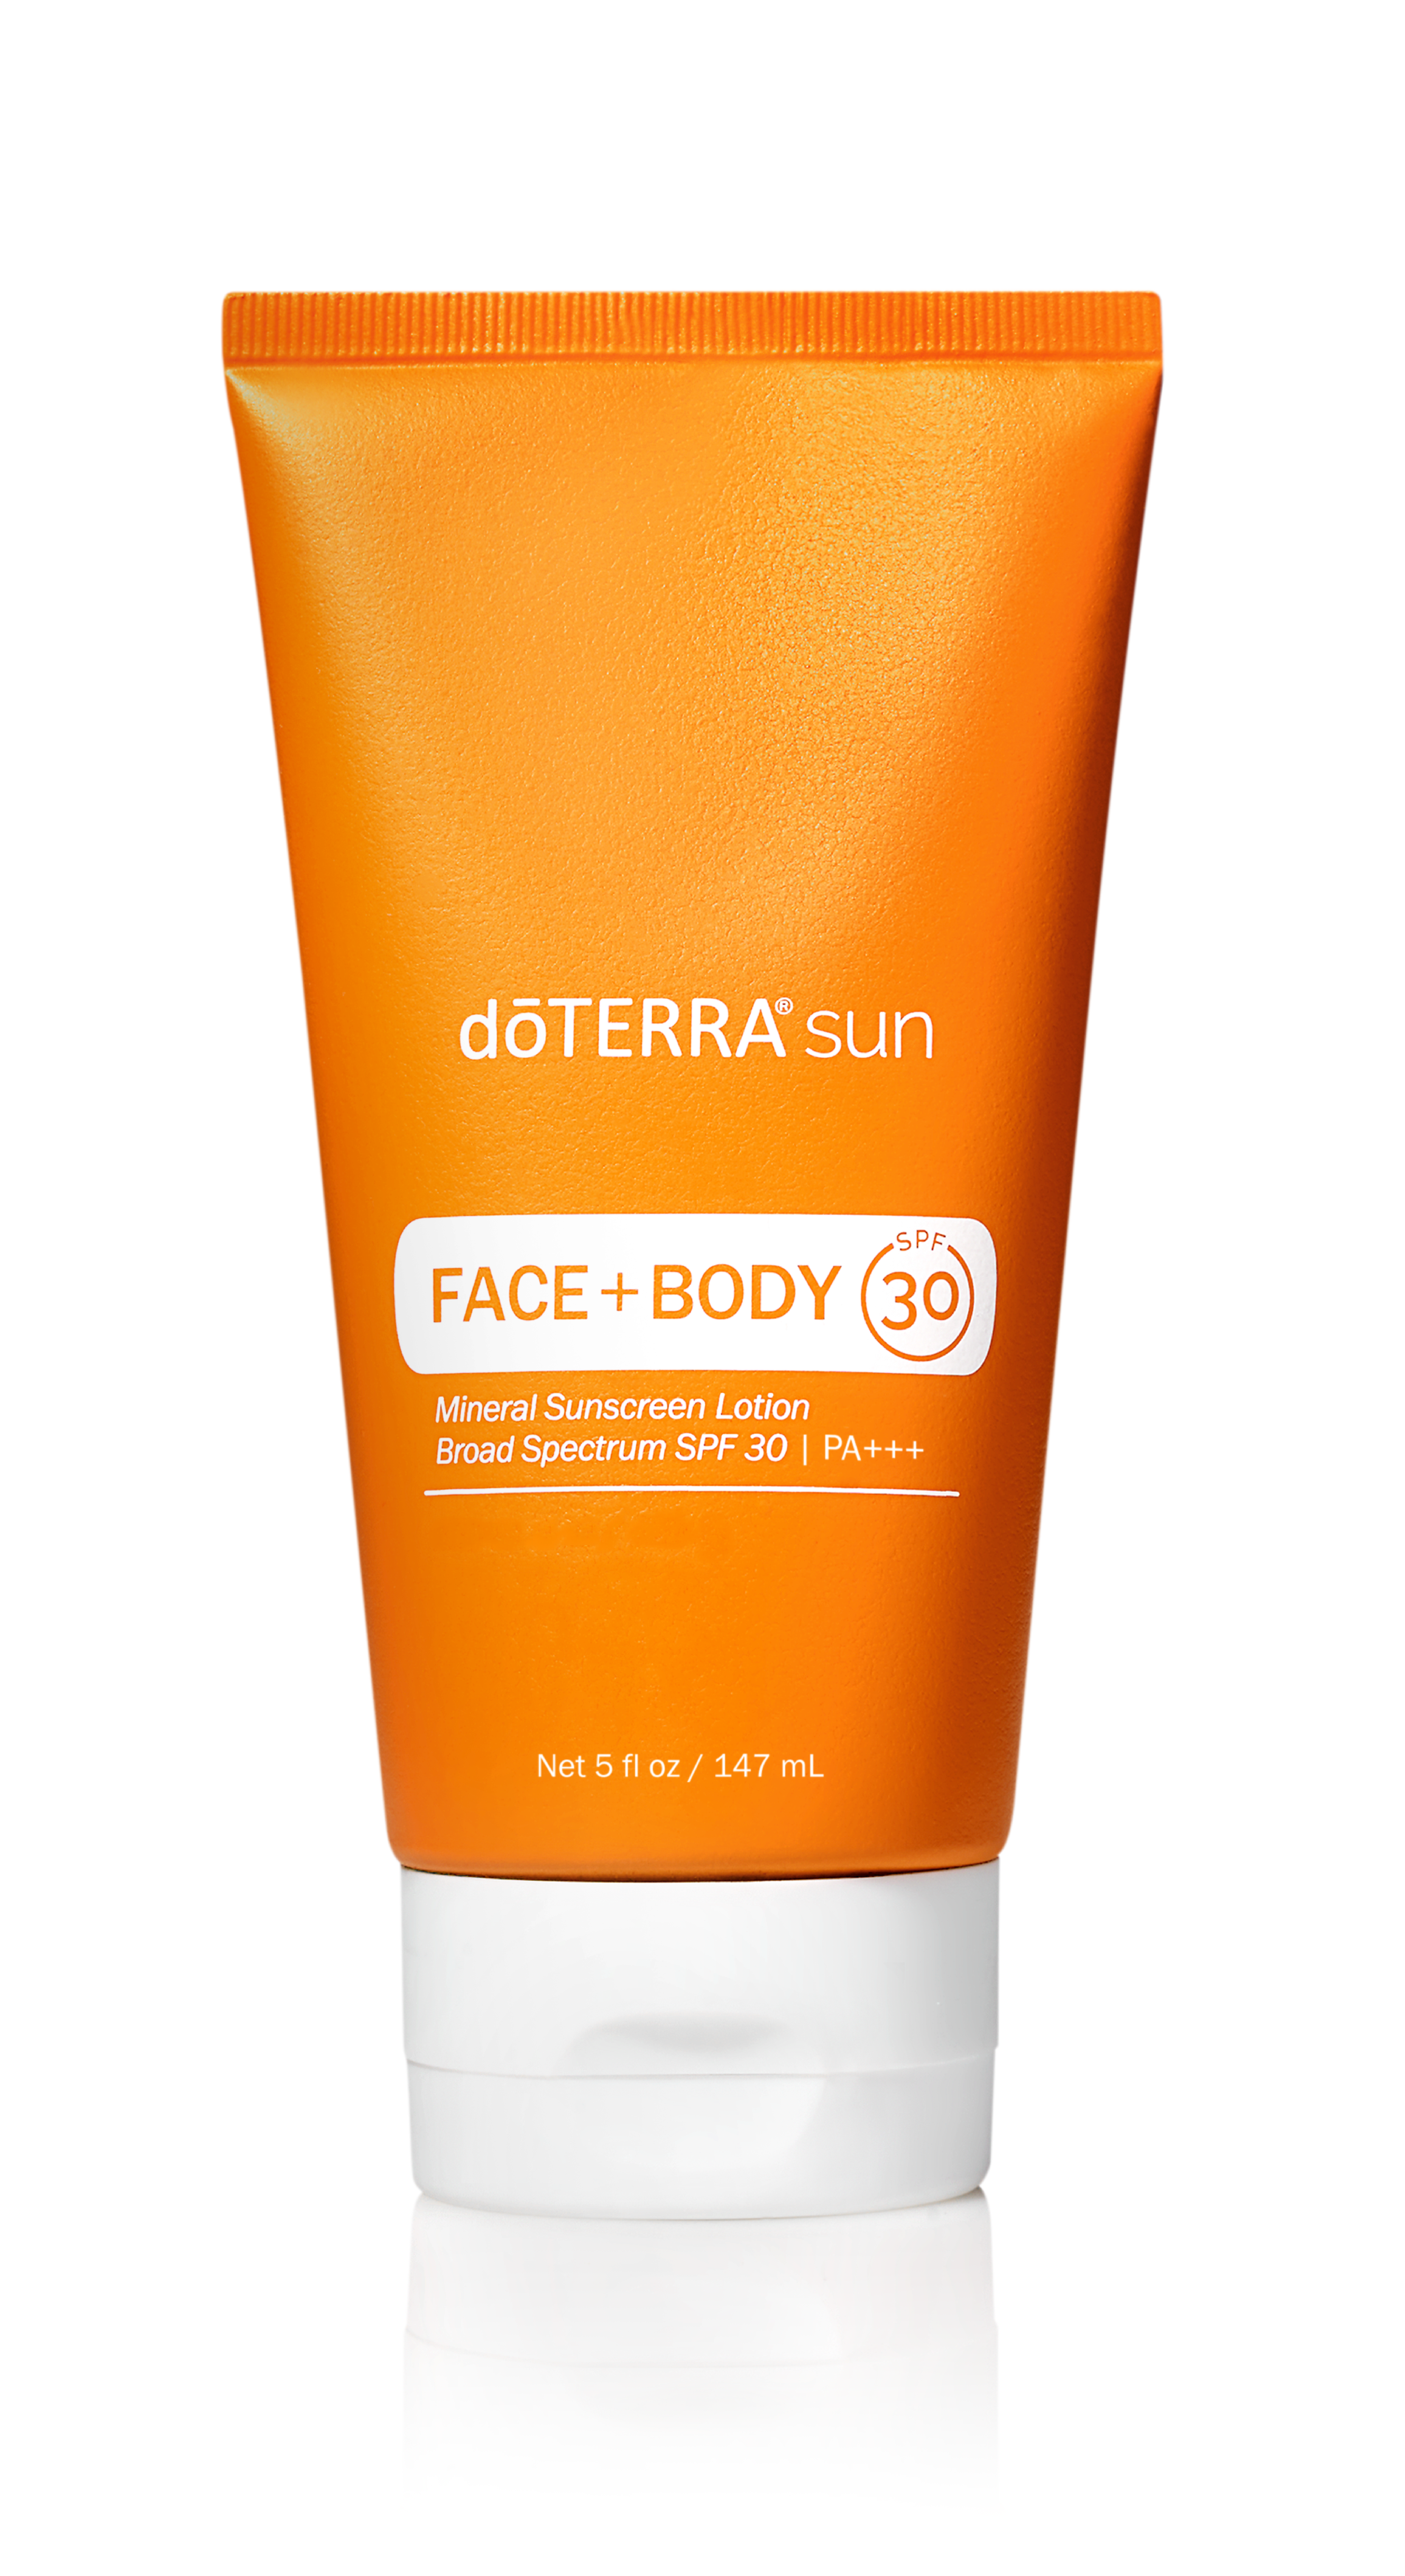 doTERRA sun Face + Body Mineral Sunscreen Lotion | dōTERRA Essential Oils